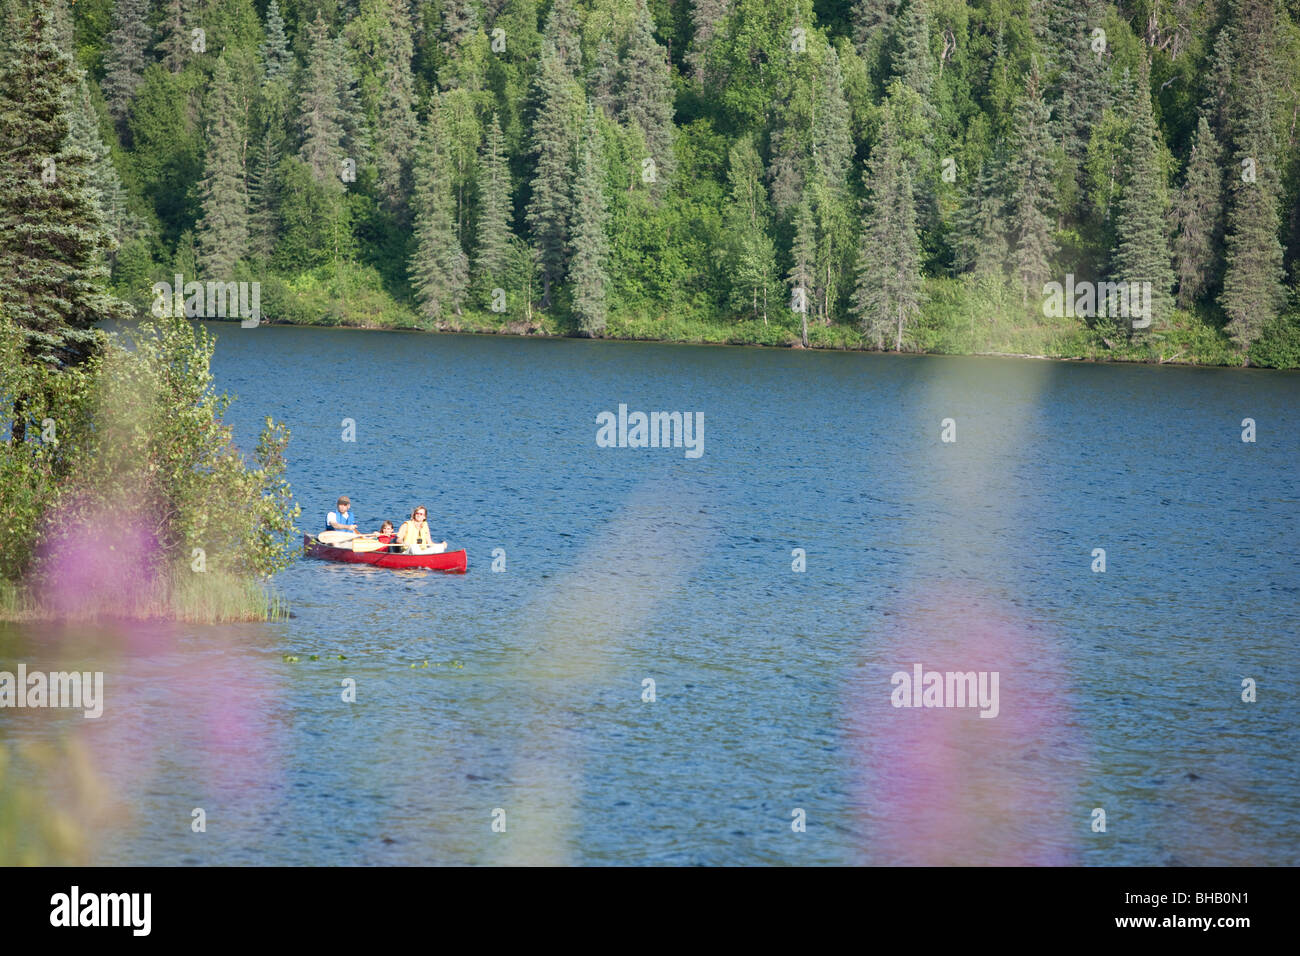 Famiglia paddling una canoa insieme sul lago Byers, estate, Denali State Park, centromeridionale Alaska, Stati Uniti d'America. Foto Stock